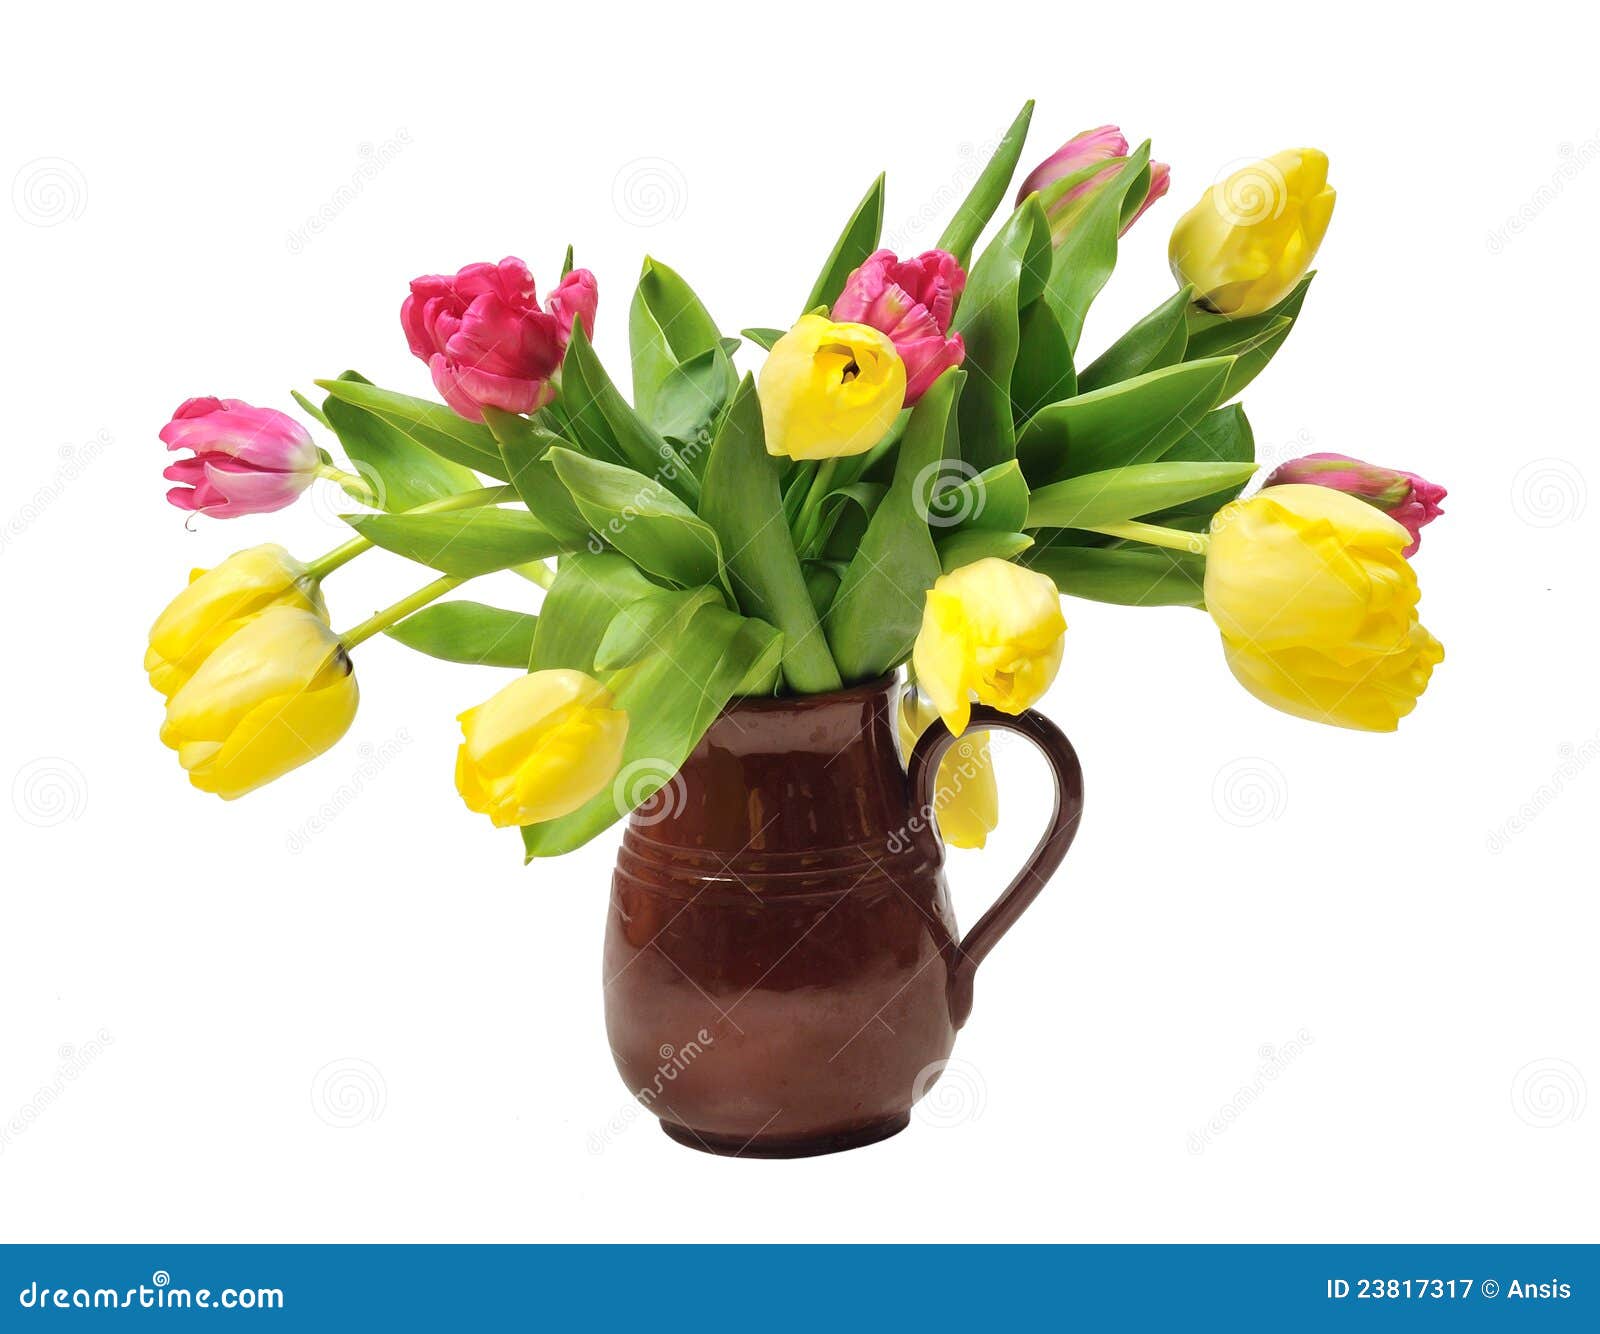 Ceramic mug with tulips stock image. Image of event, holiday - 23817317